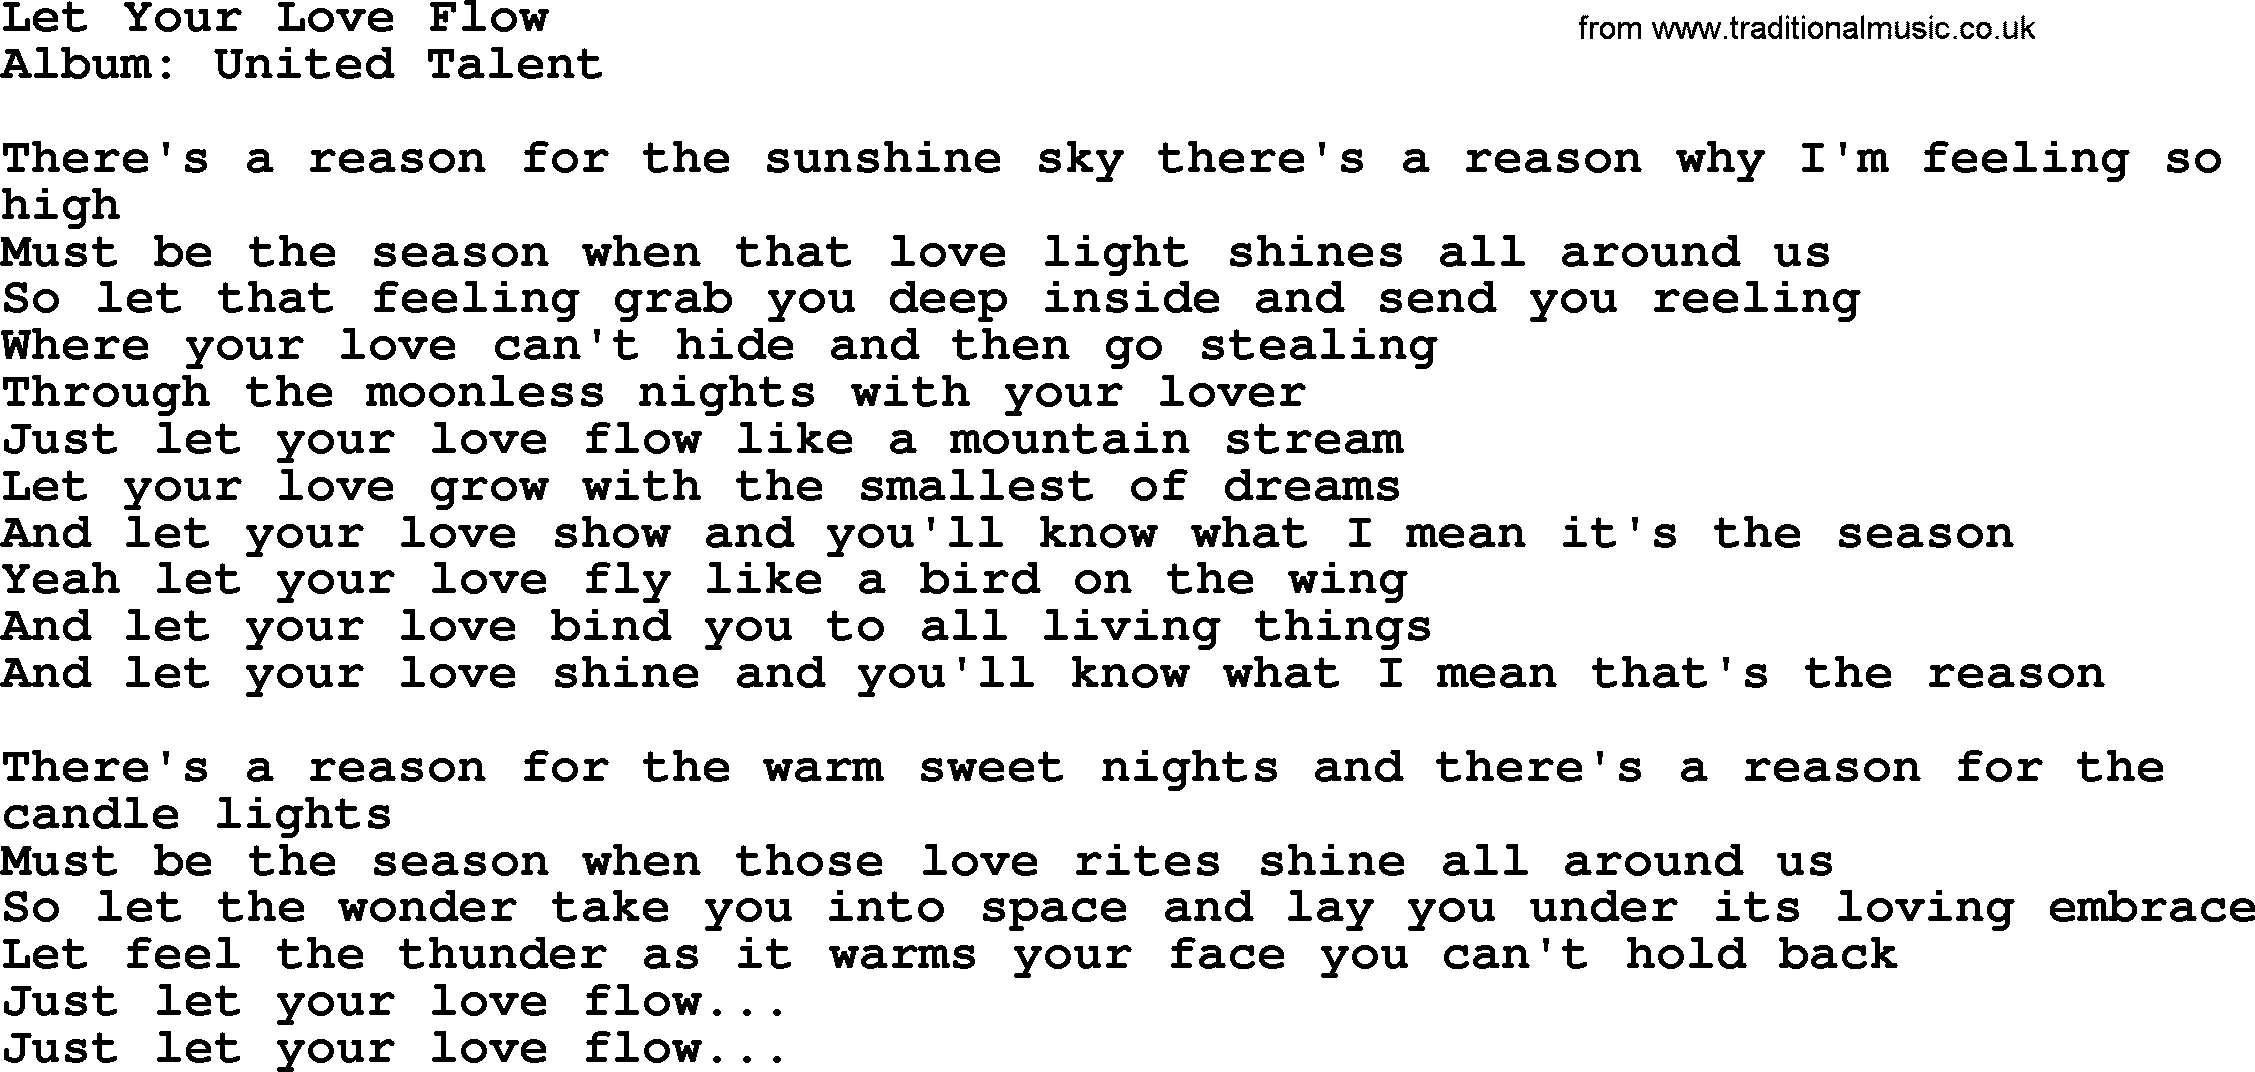 Loretta Lynn song: Let Your Love Flow lyrics